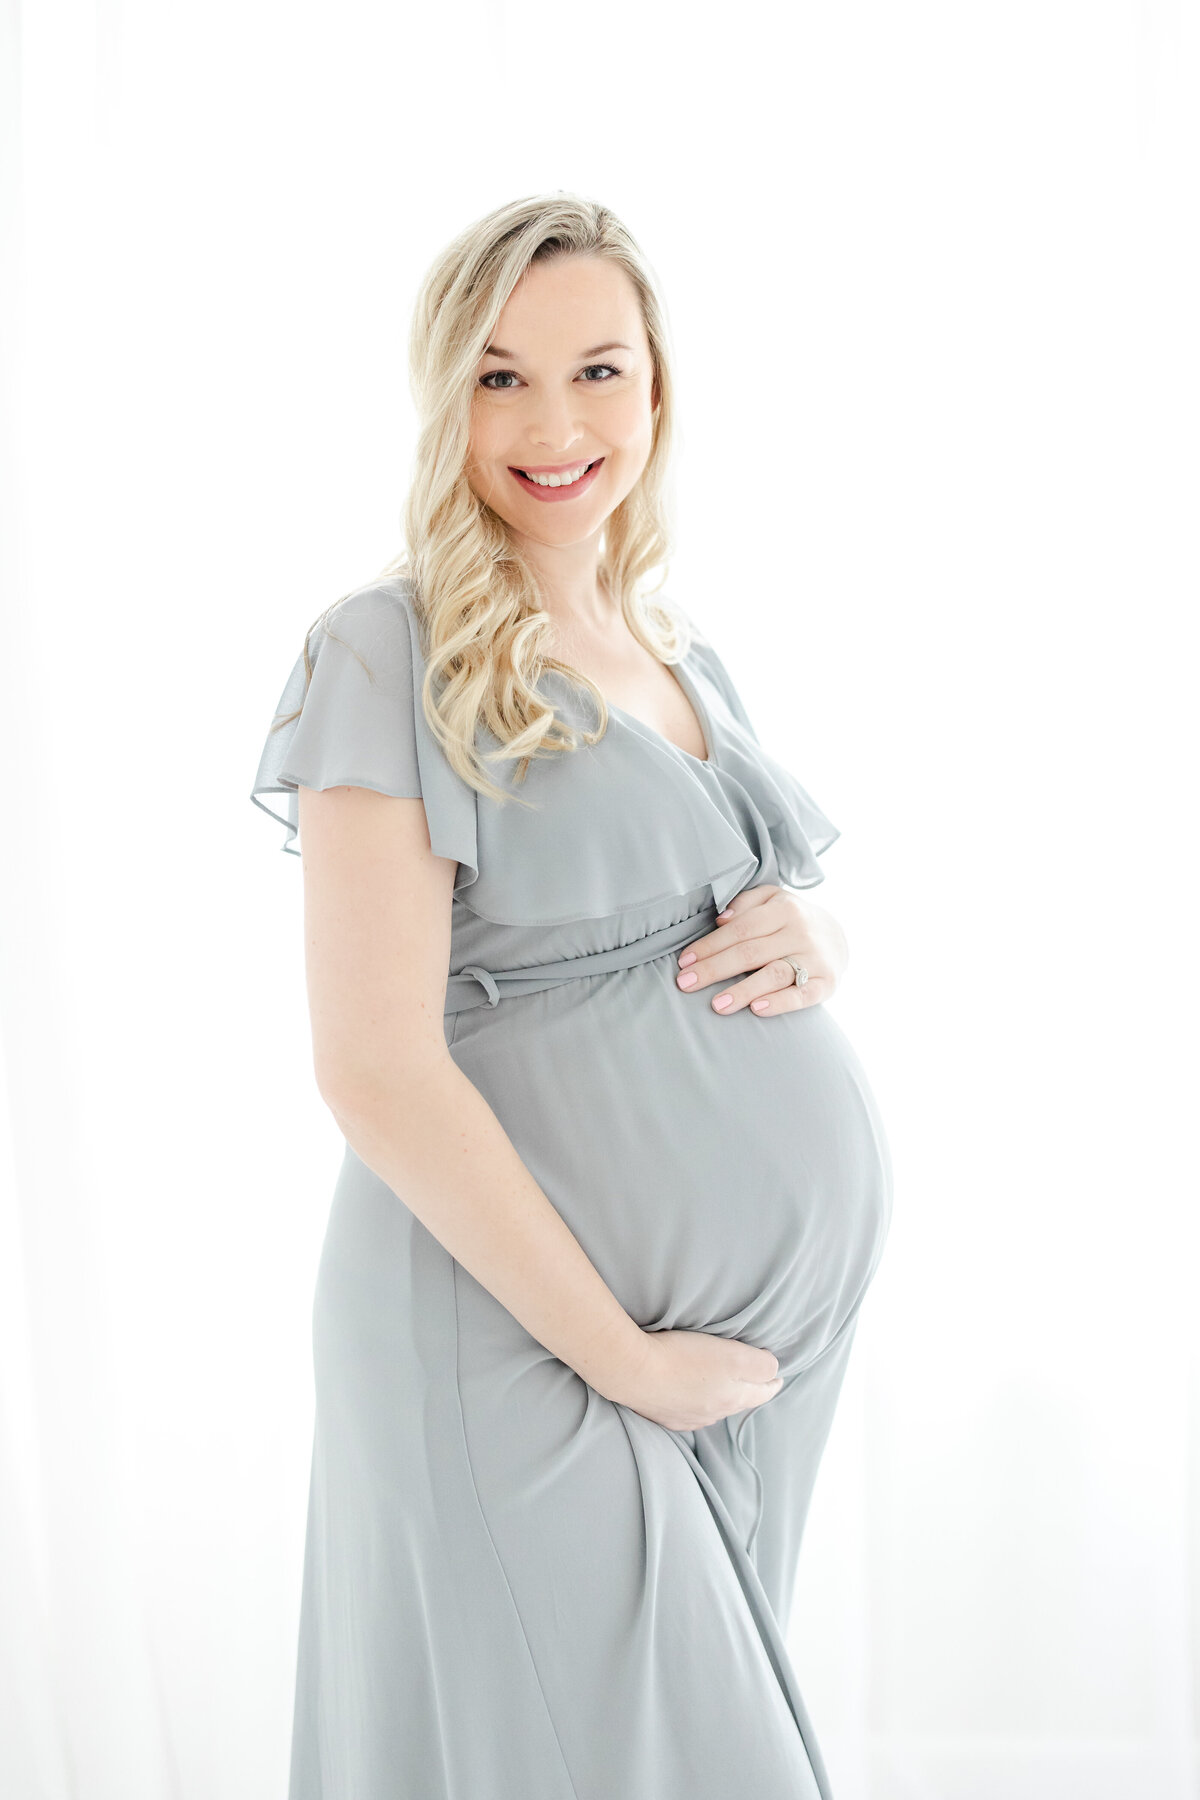 Westport CT Maternity Photographer - 24